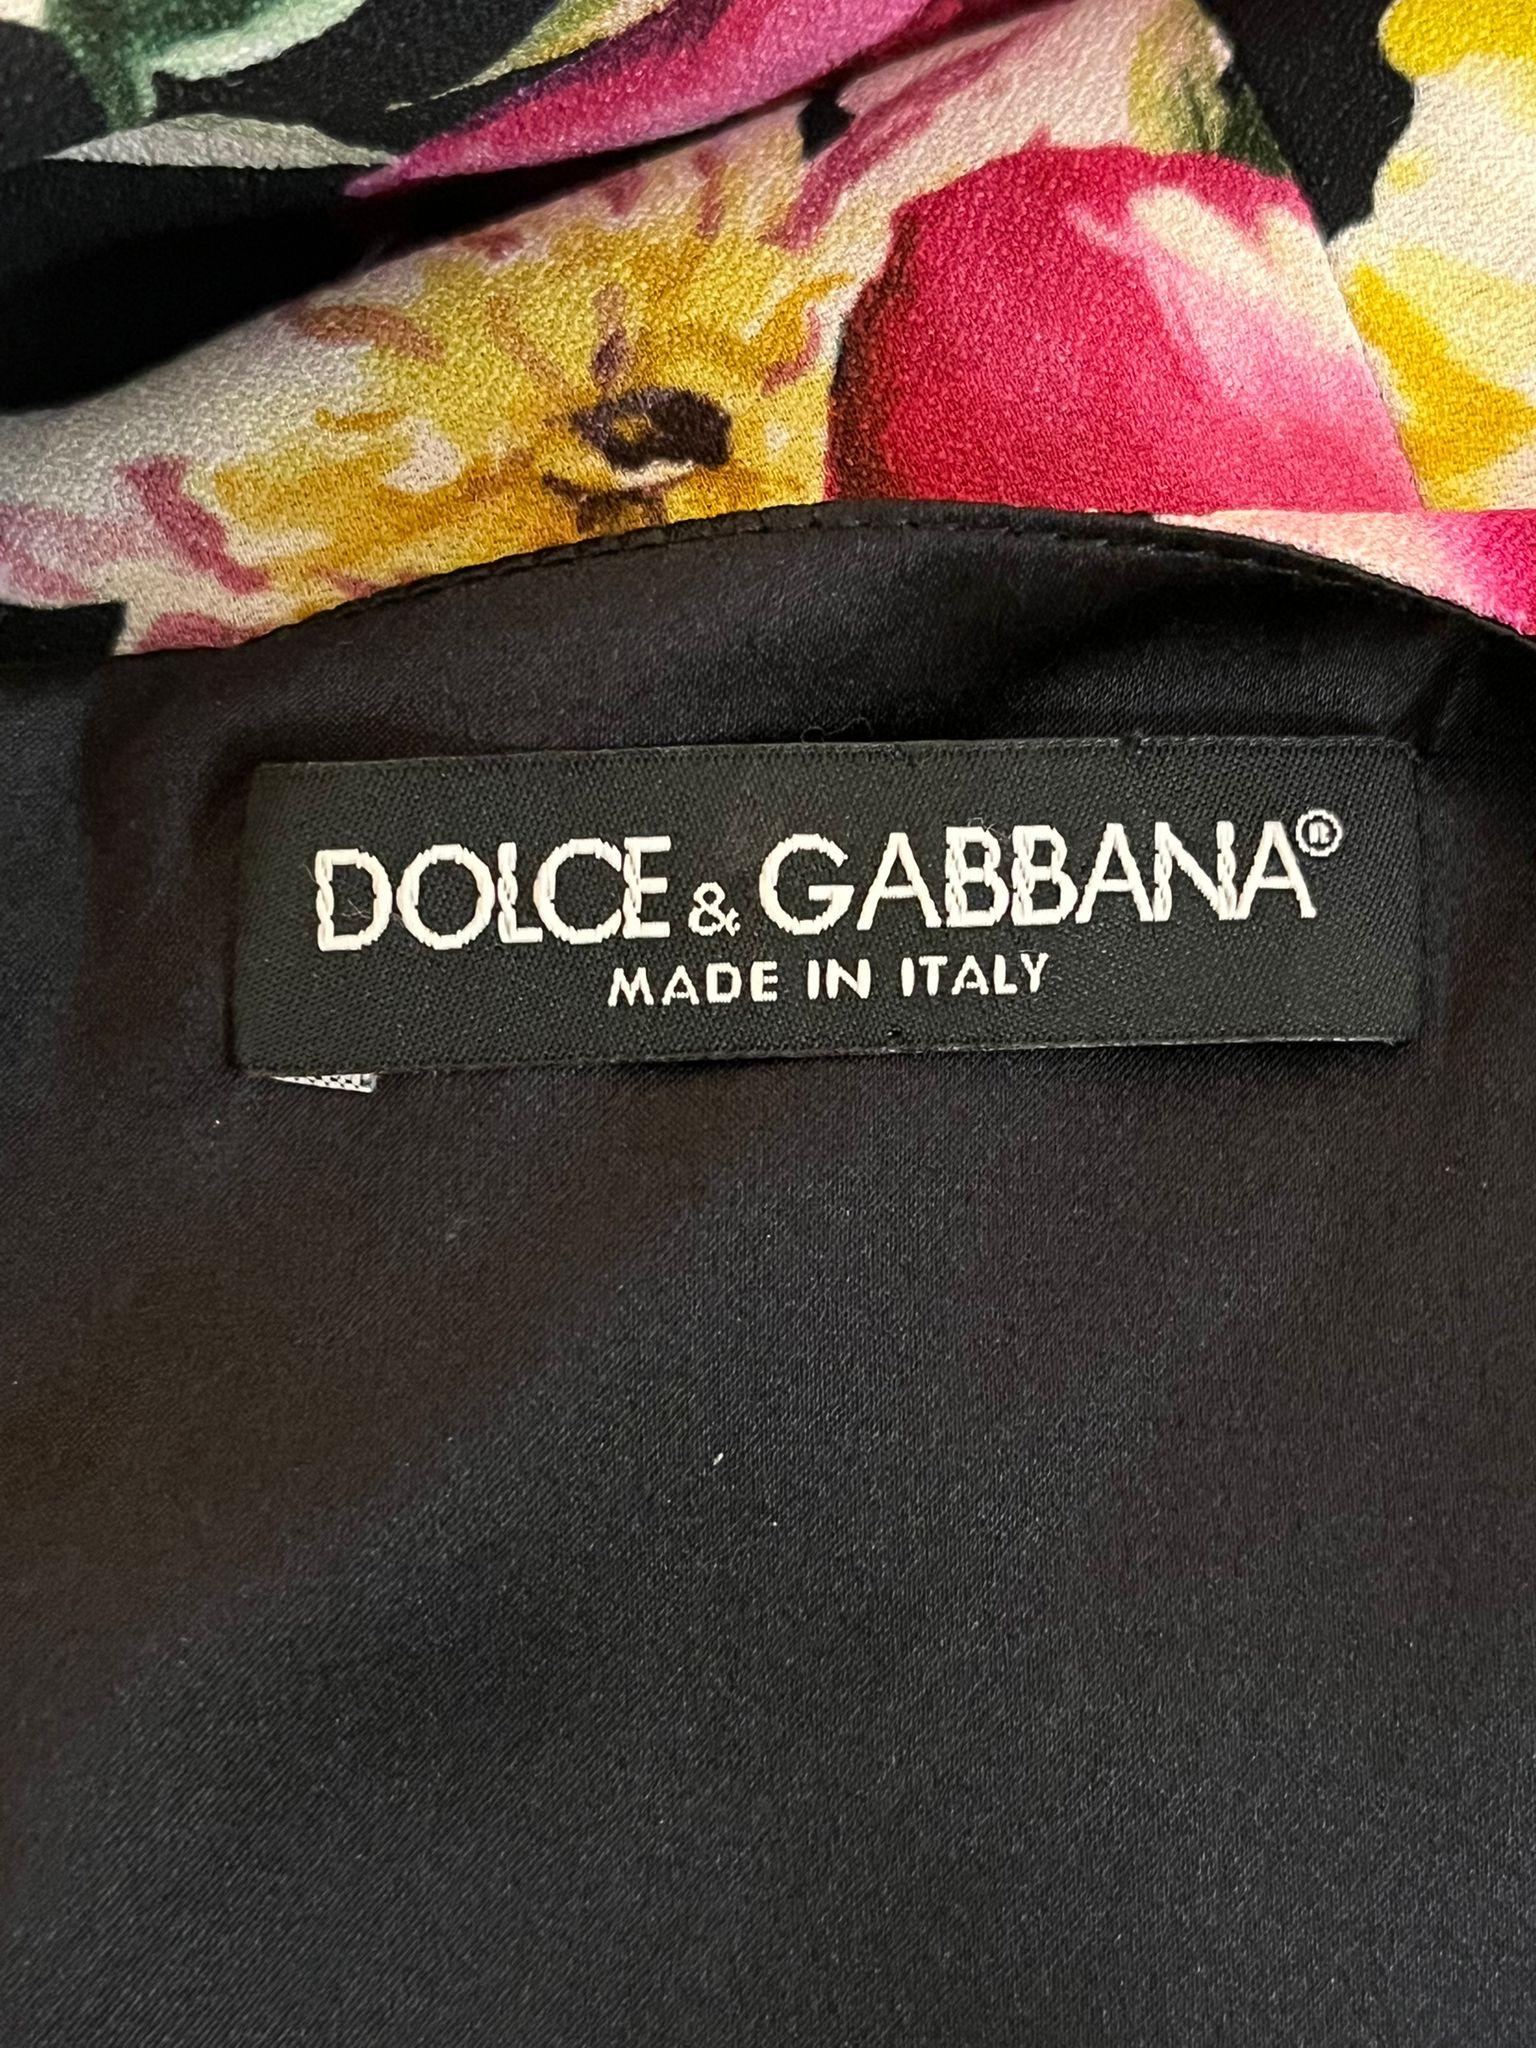 Dolce & Gabbana Floral A-Line Dress For Sale 1